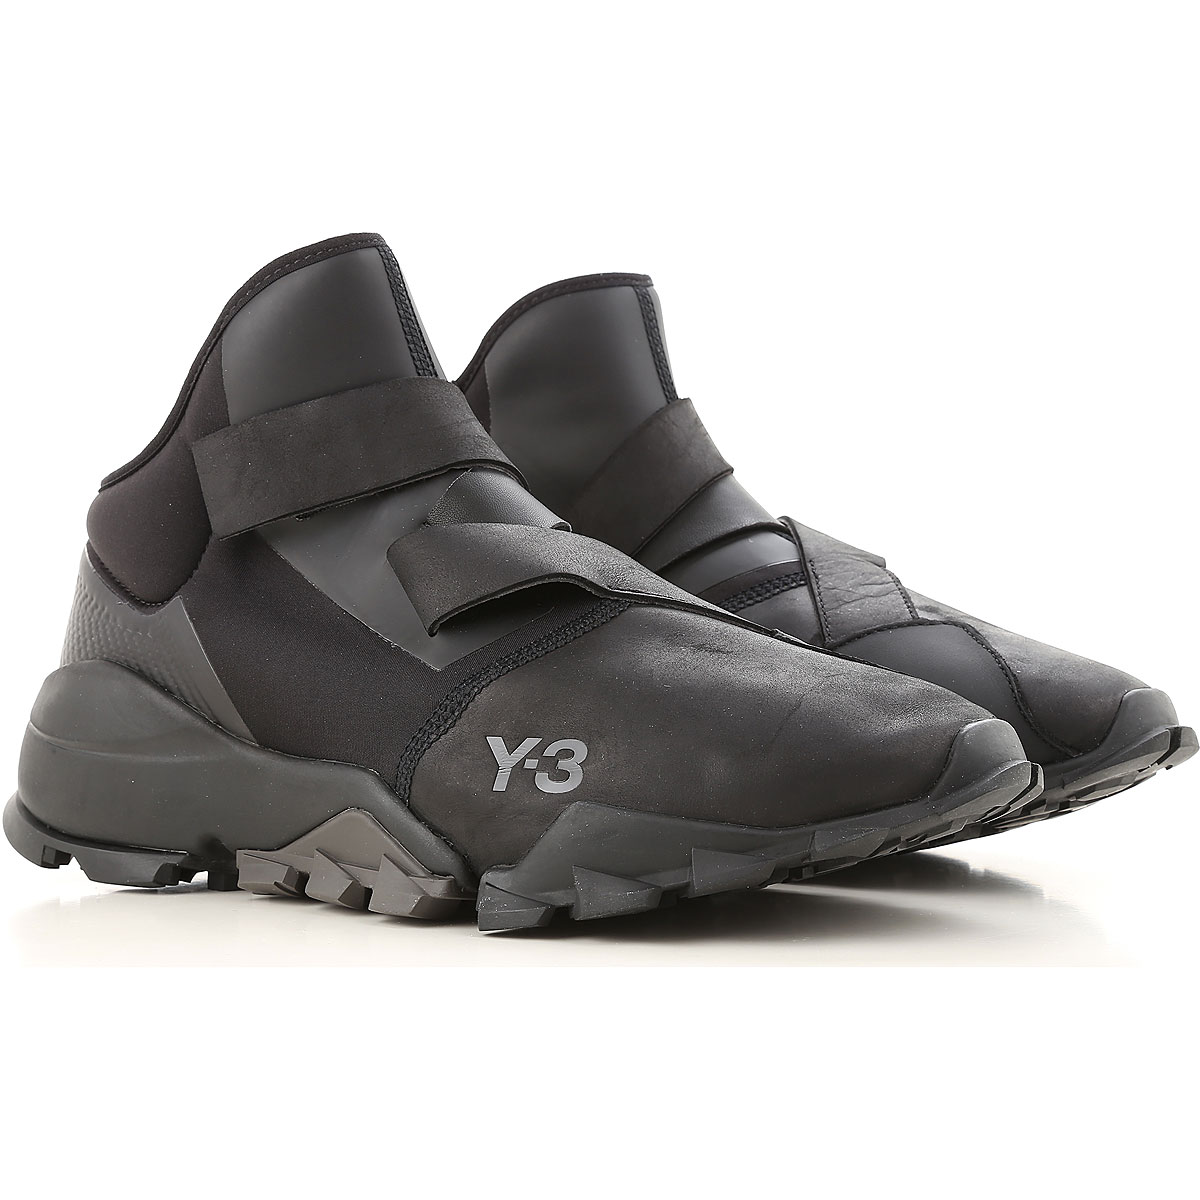 G n y 3 5 y. Y-3 adidas Yohji Yamamoto. Y-3 by Yohji Yamamoto Shoes. Yoshi Yamamoto y-3. Кроссовки Yohji Yamamoto y-3 мужские.